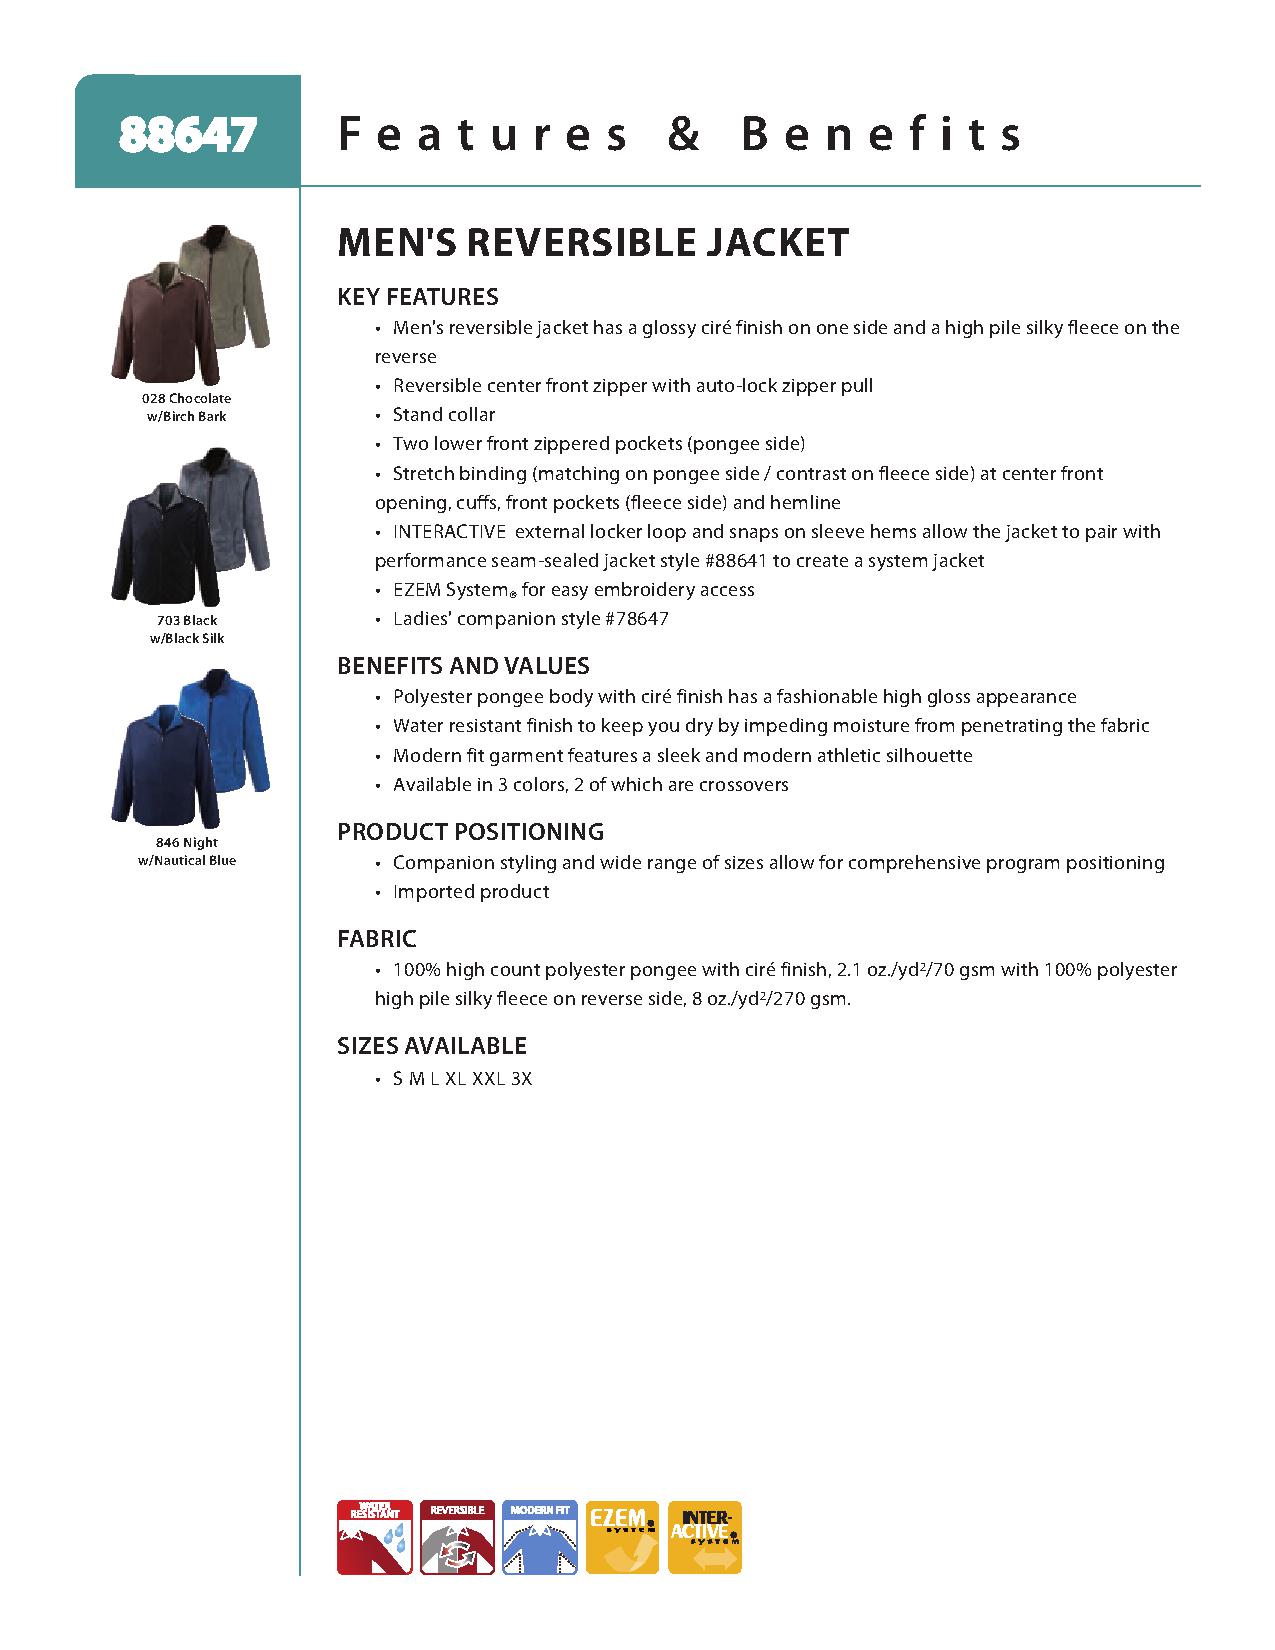 Ash City Reversible Jackets 88647 - Men's Reversible Jacket